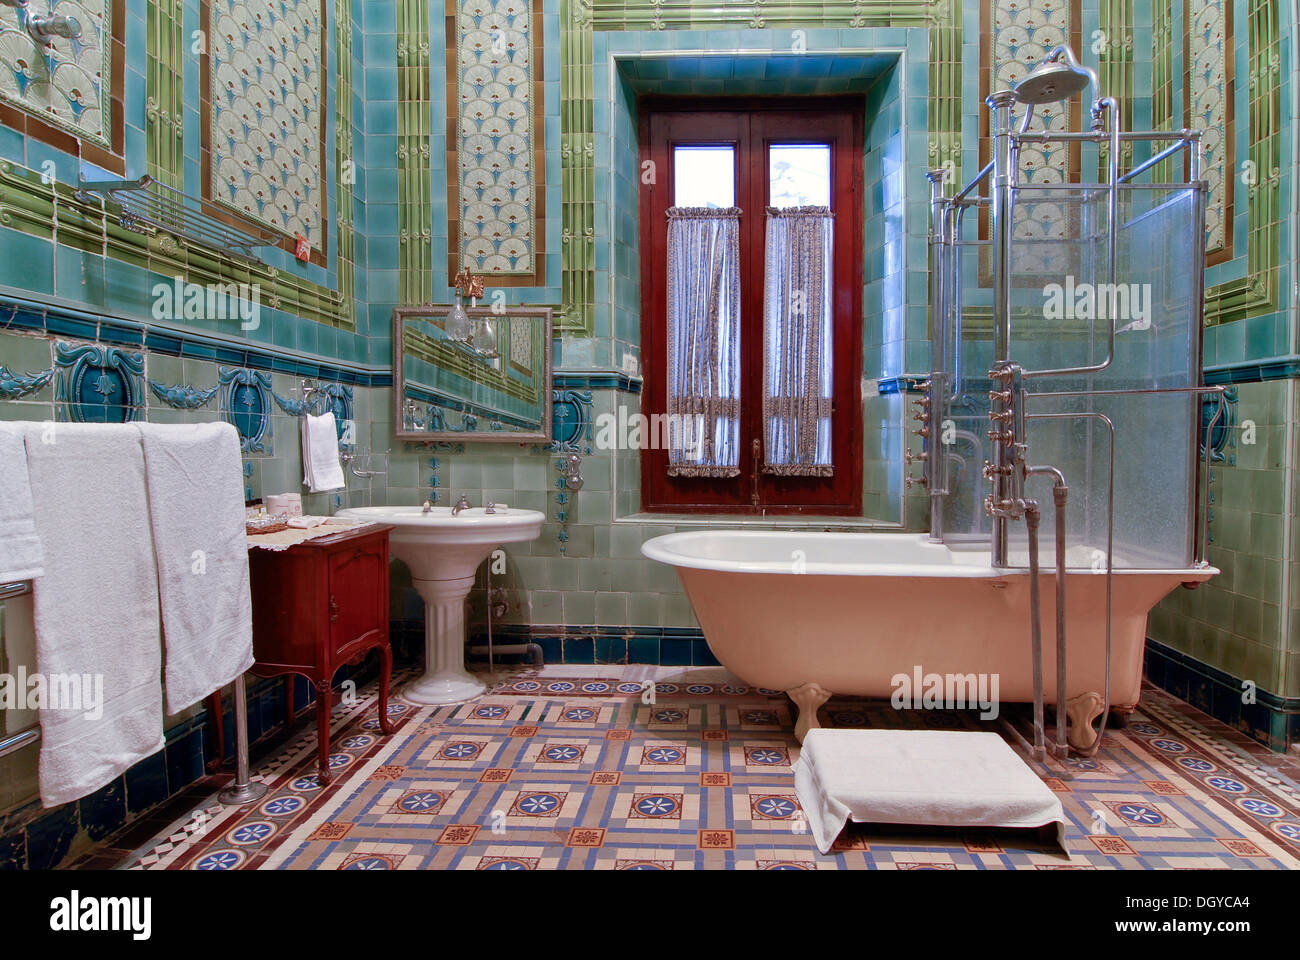 Bathroom tiled with Belgian tiles, Heritage Hotel Raj Niwas Palace, Dholpur, Rajasthan, North India, India, Asia Stock Photo